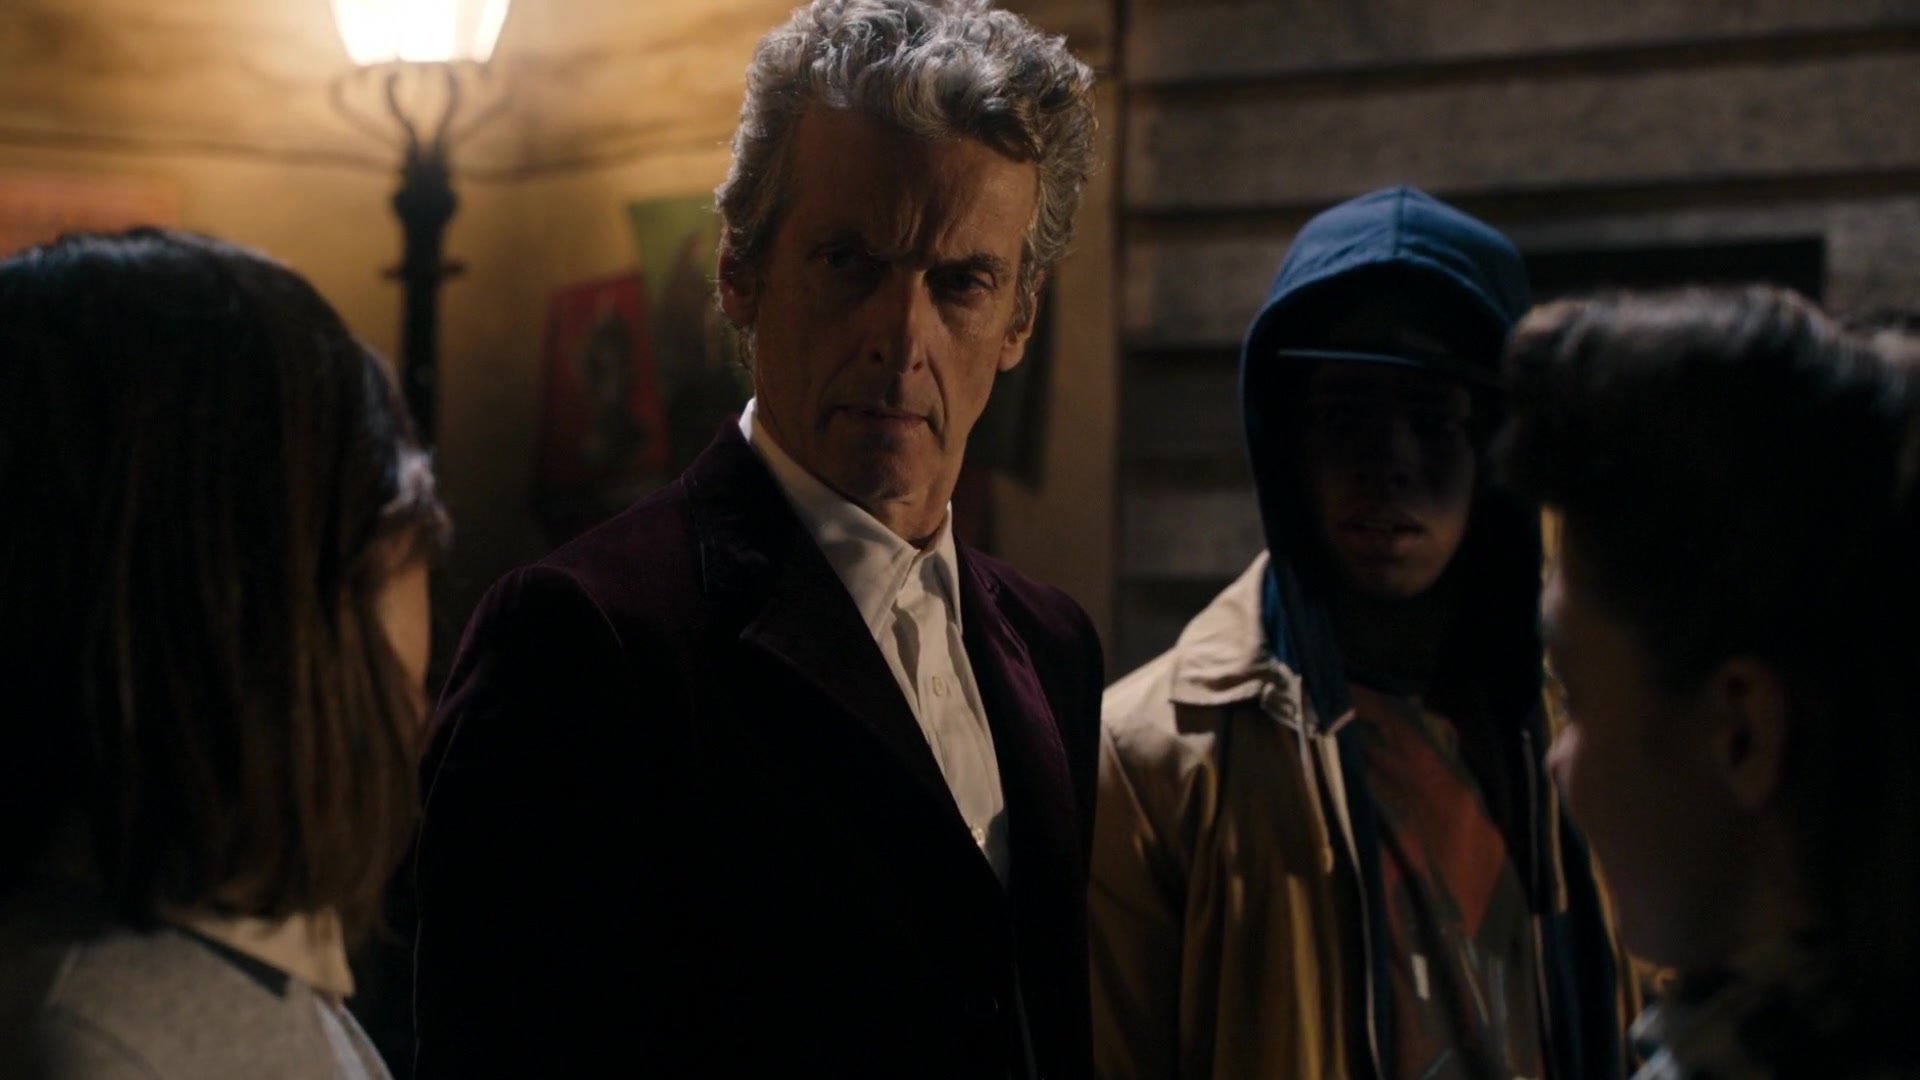 Doctor_Who_9x10-Sleep_No_More_0299.jpg